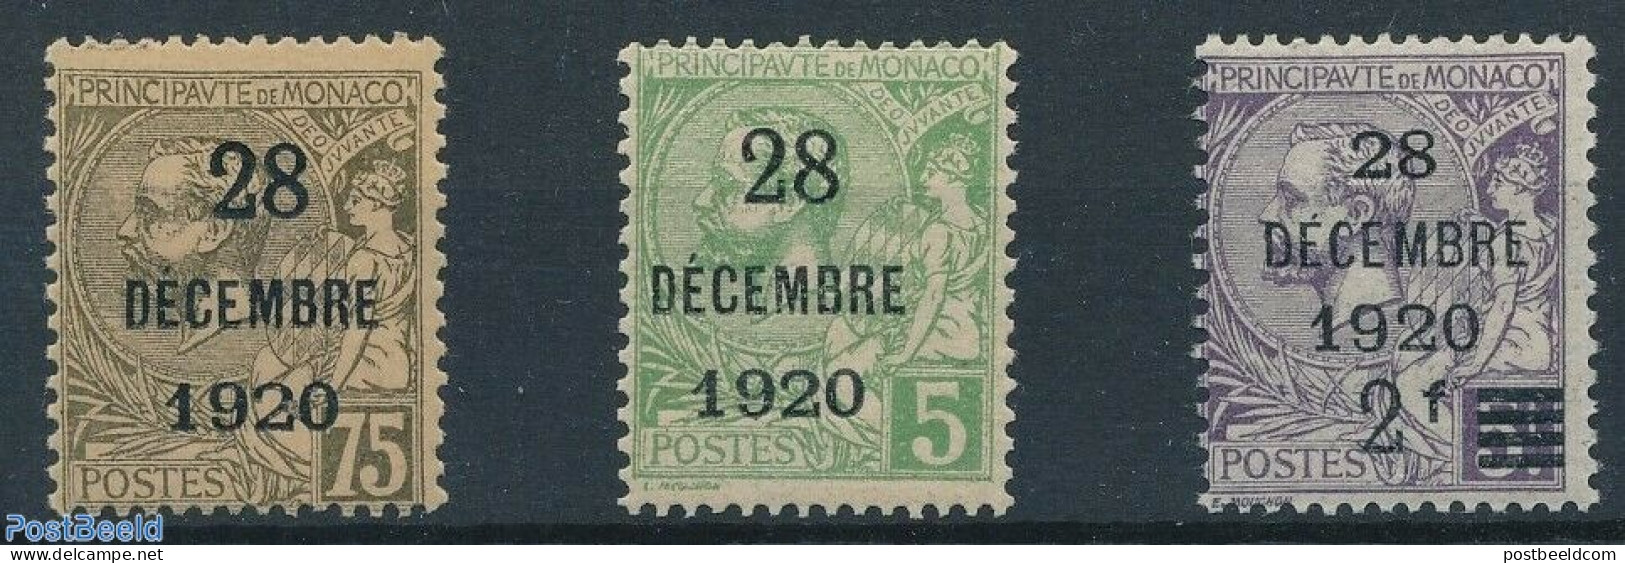 Monaco 1921 28 DEC 1920 Overprints 3v, Unused (hinged) - Neufs